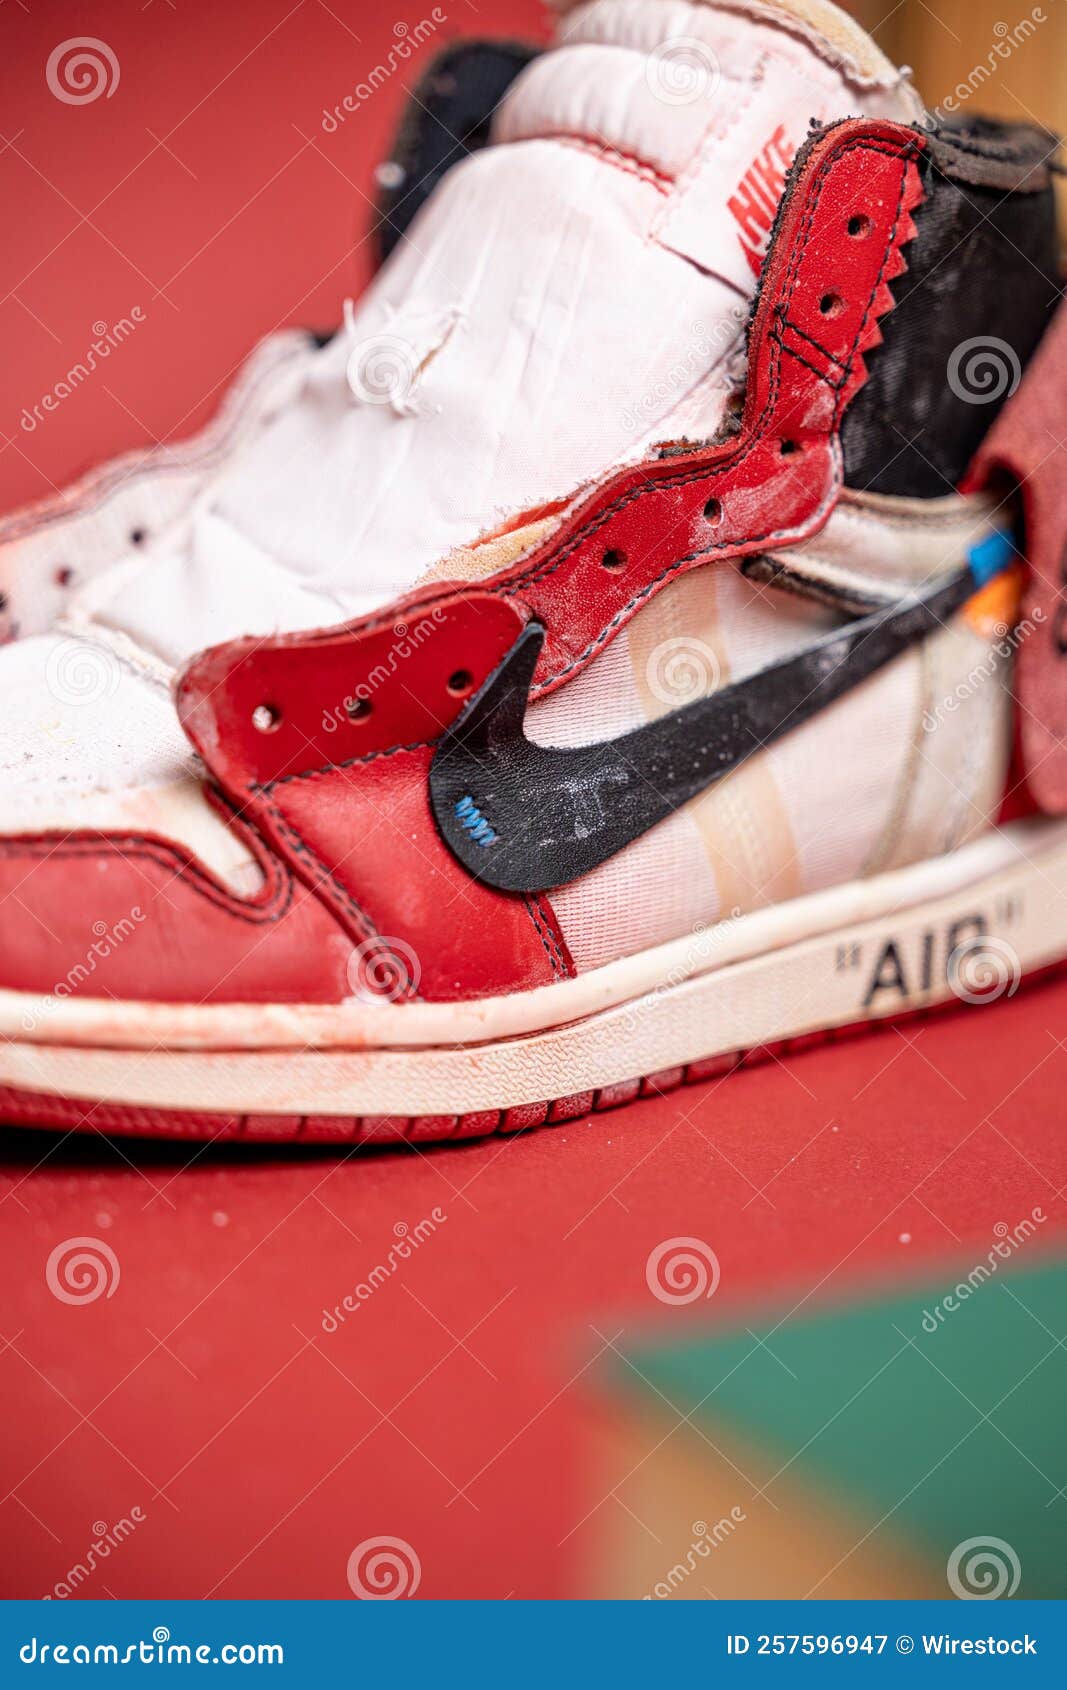 Red Air Jordan 1 Off White from Nike. the Ten Air 1. Closeup of Nike Air Jordan 1. Editorial Photography - Image of 257596947